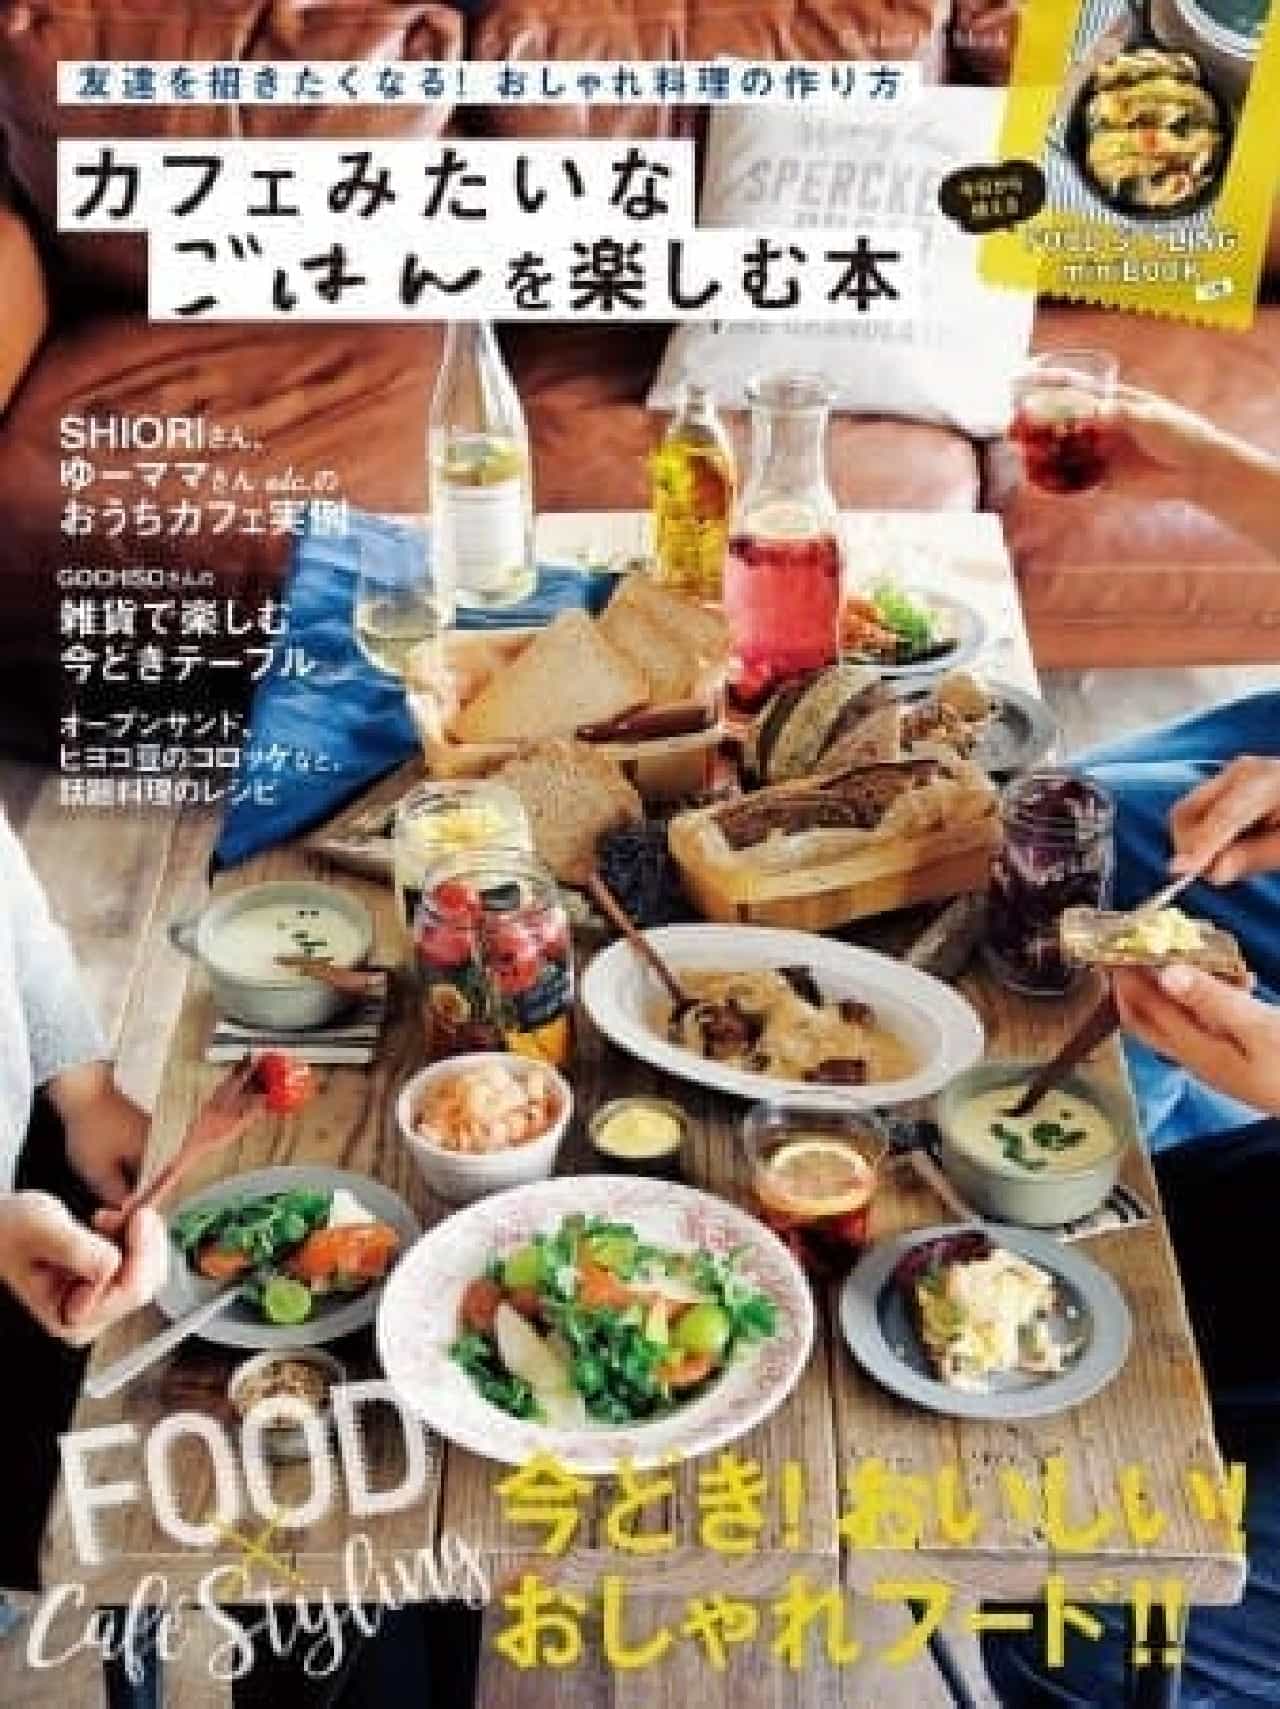 Gakken "Book to enjoy rice like a cafe"